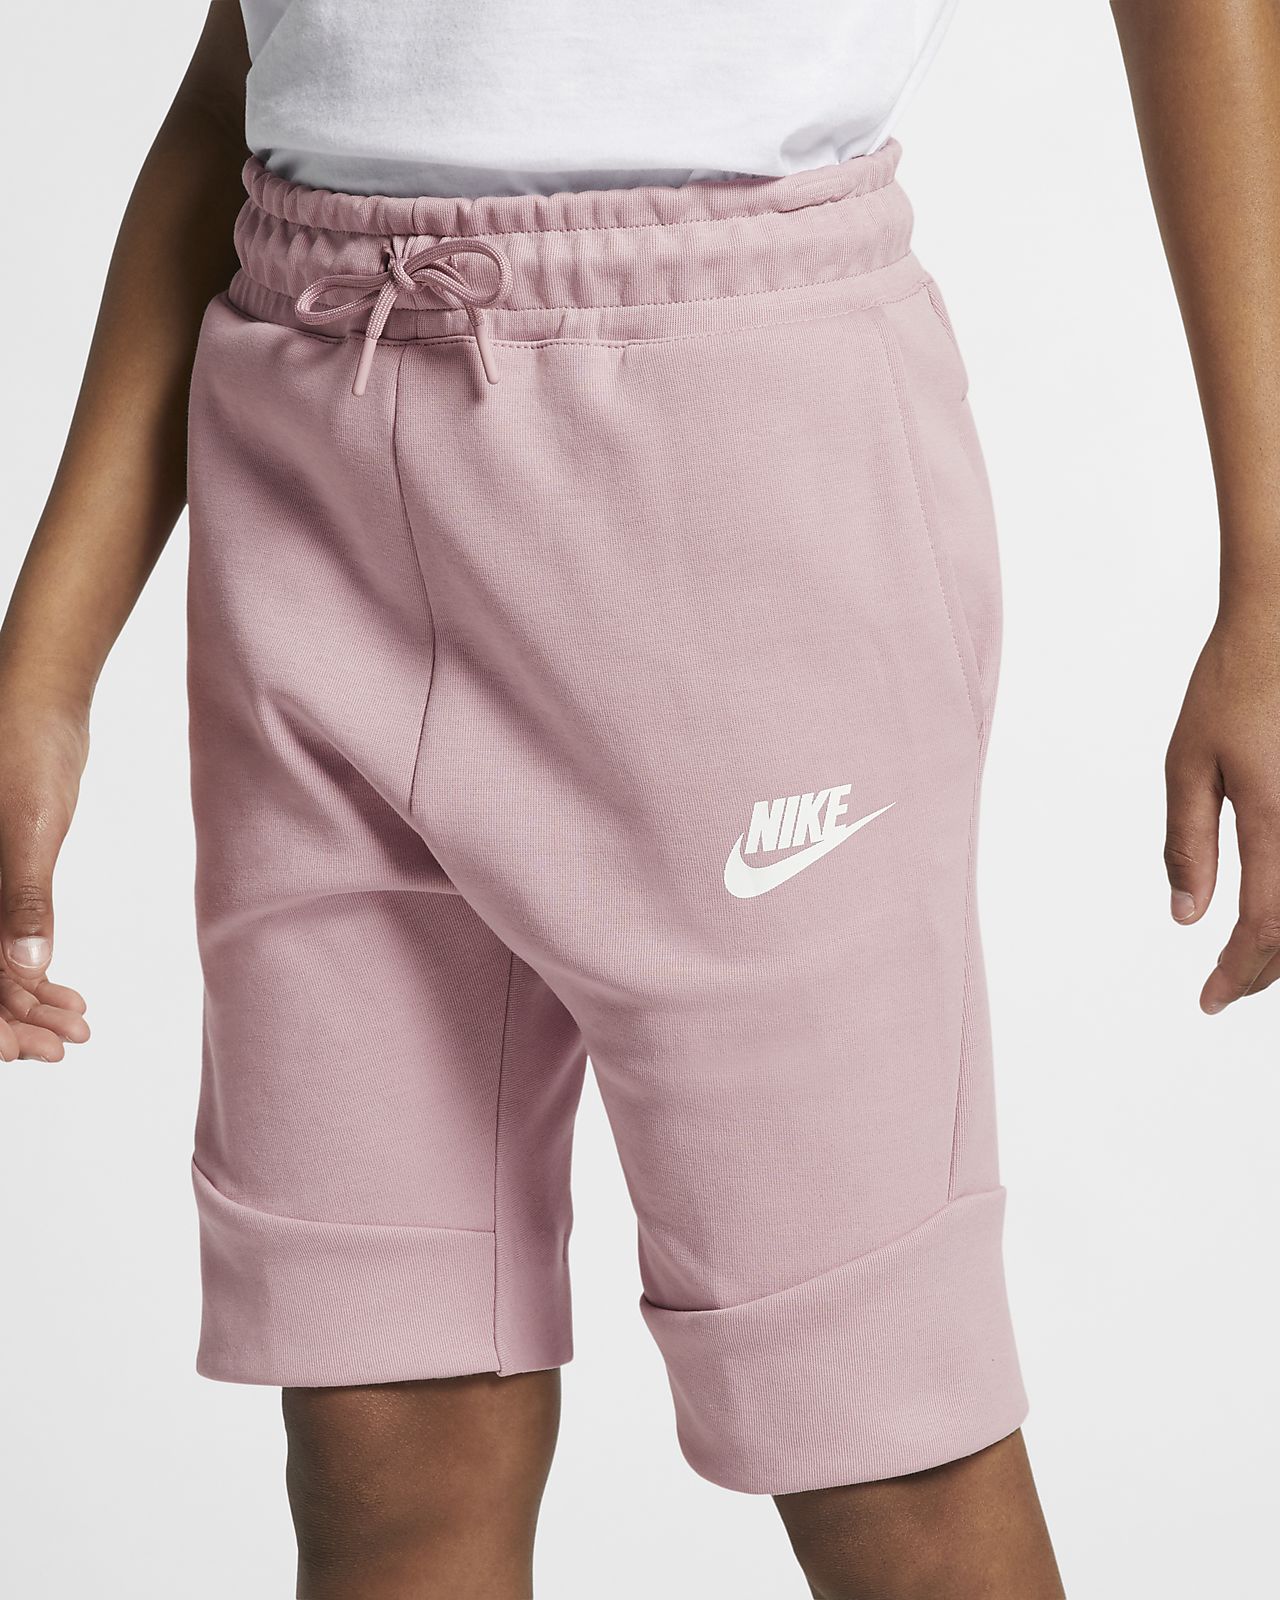 pink nike shorts boys